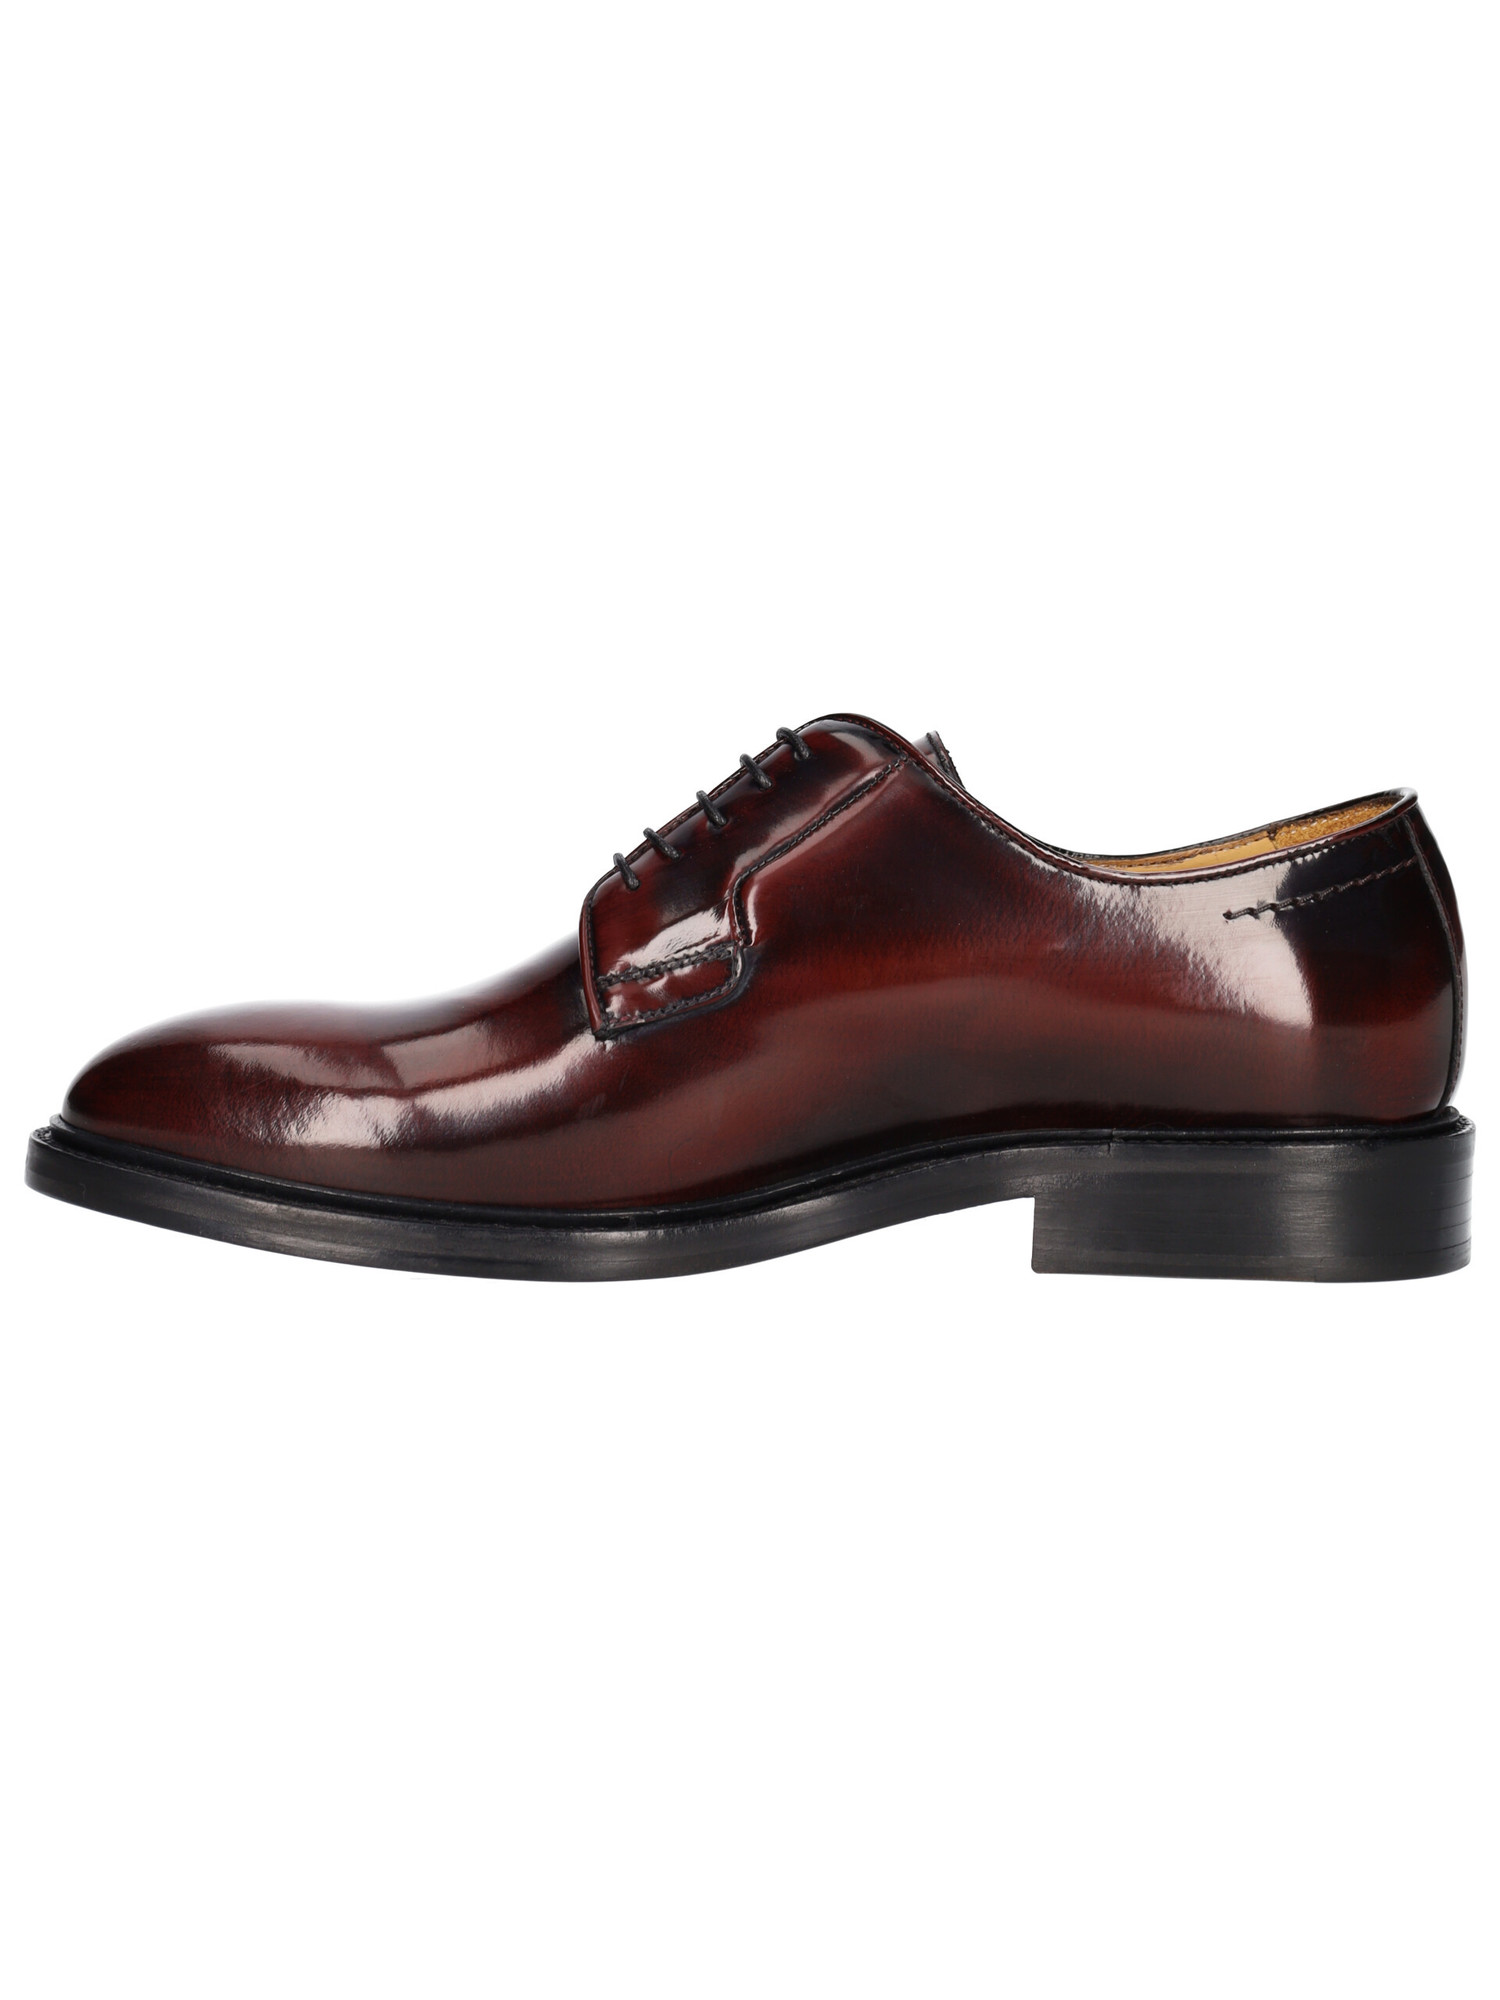 scarpa-elegante-mercanti-fiorentini-da-uomo-bordeaux-d8eb40